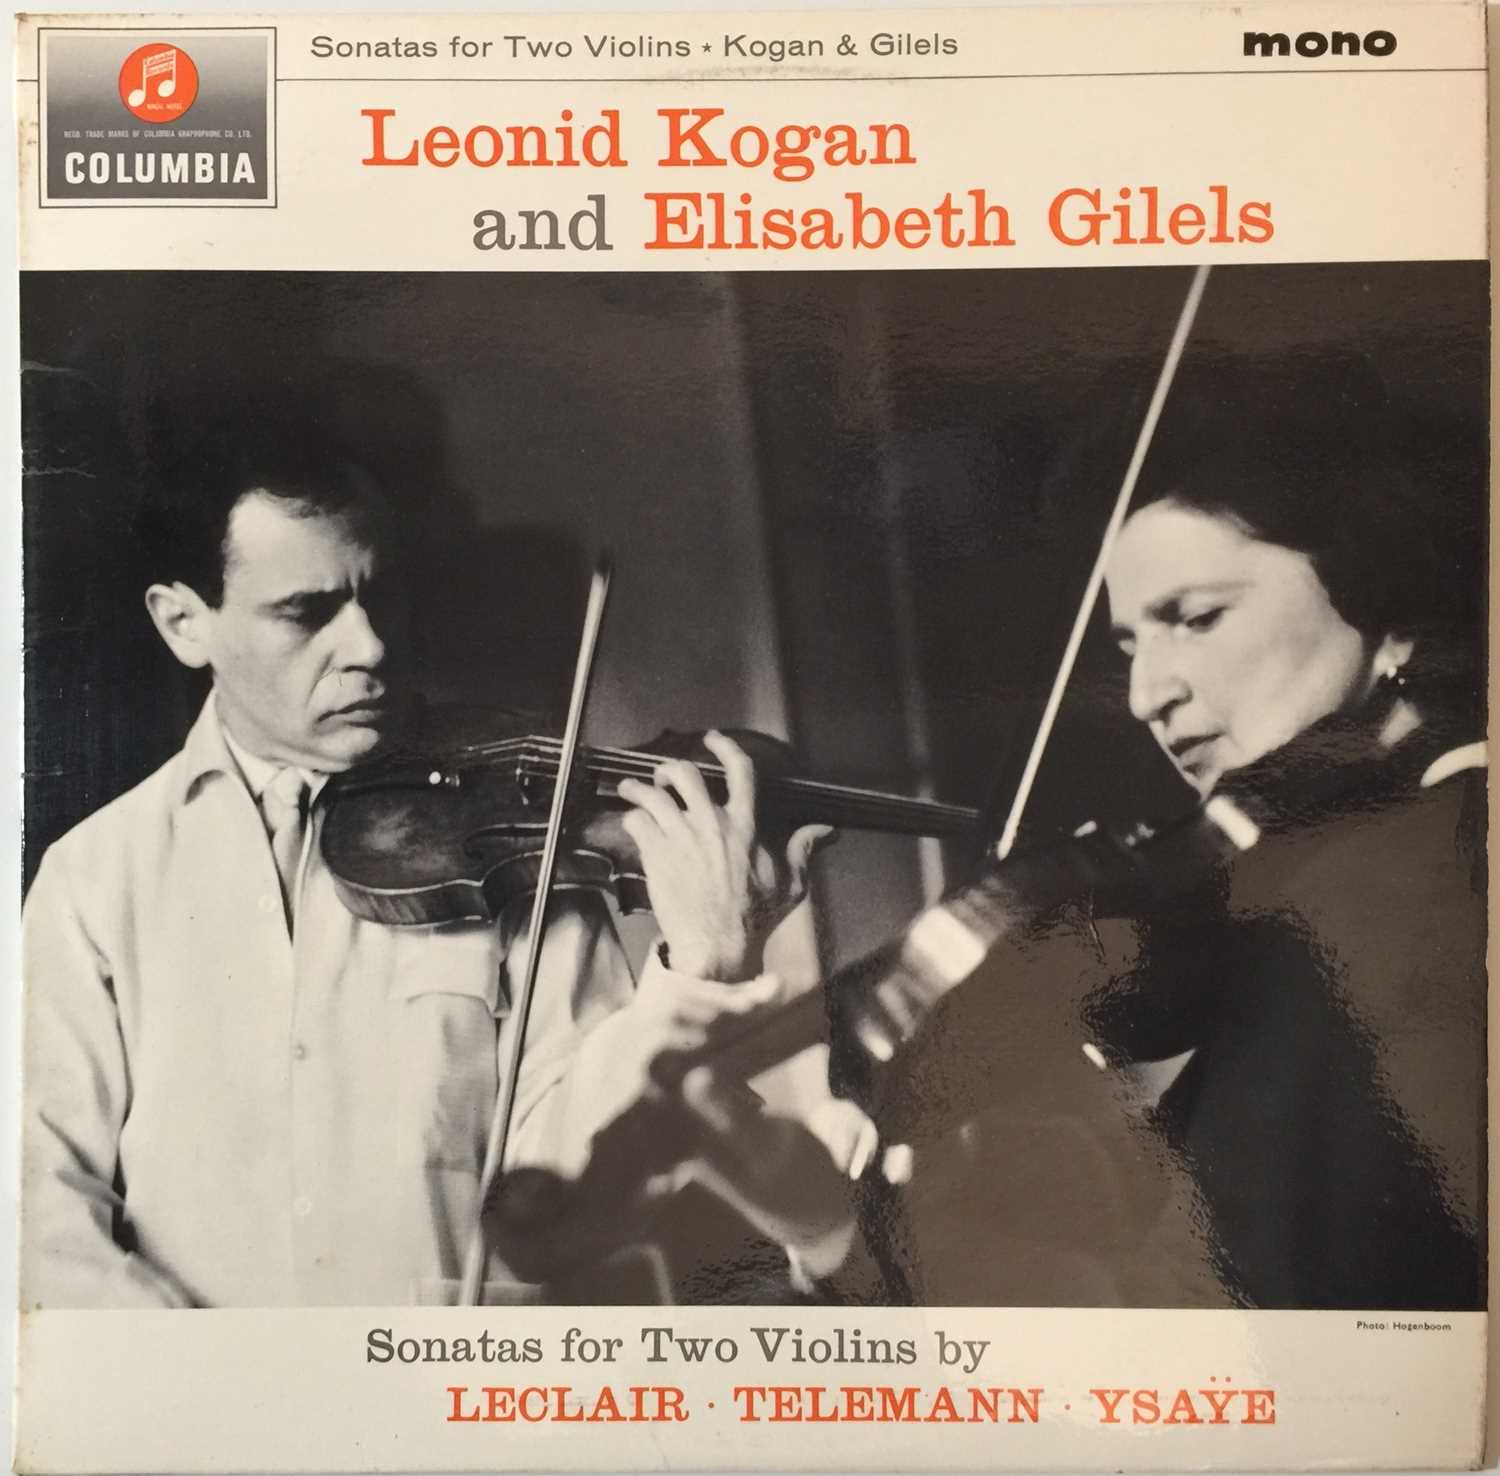 Lot 614 - LEONID KOGAN/ELISABETH GILELS - SONATAS FOR TWO VIOLINS LP (ORIGINAL UK MONO RELEASE - COLUMIBA 33CX 1887)